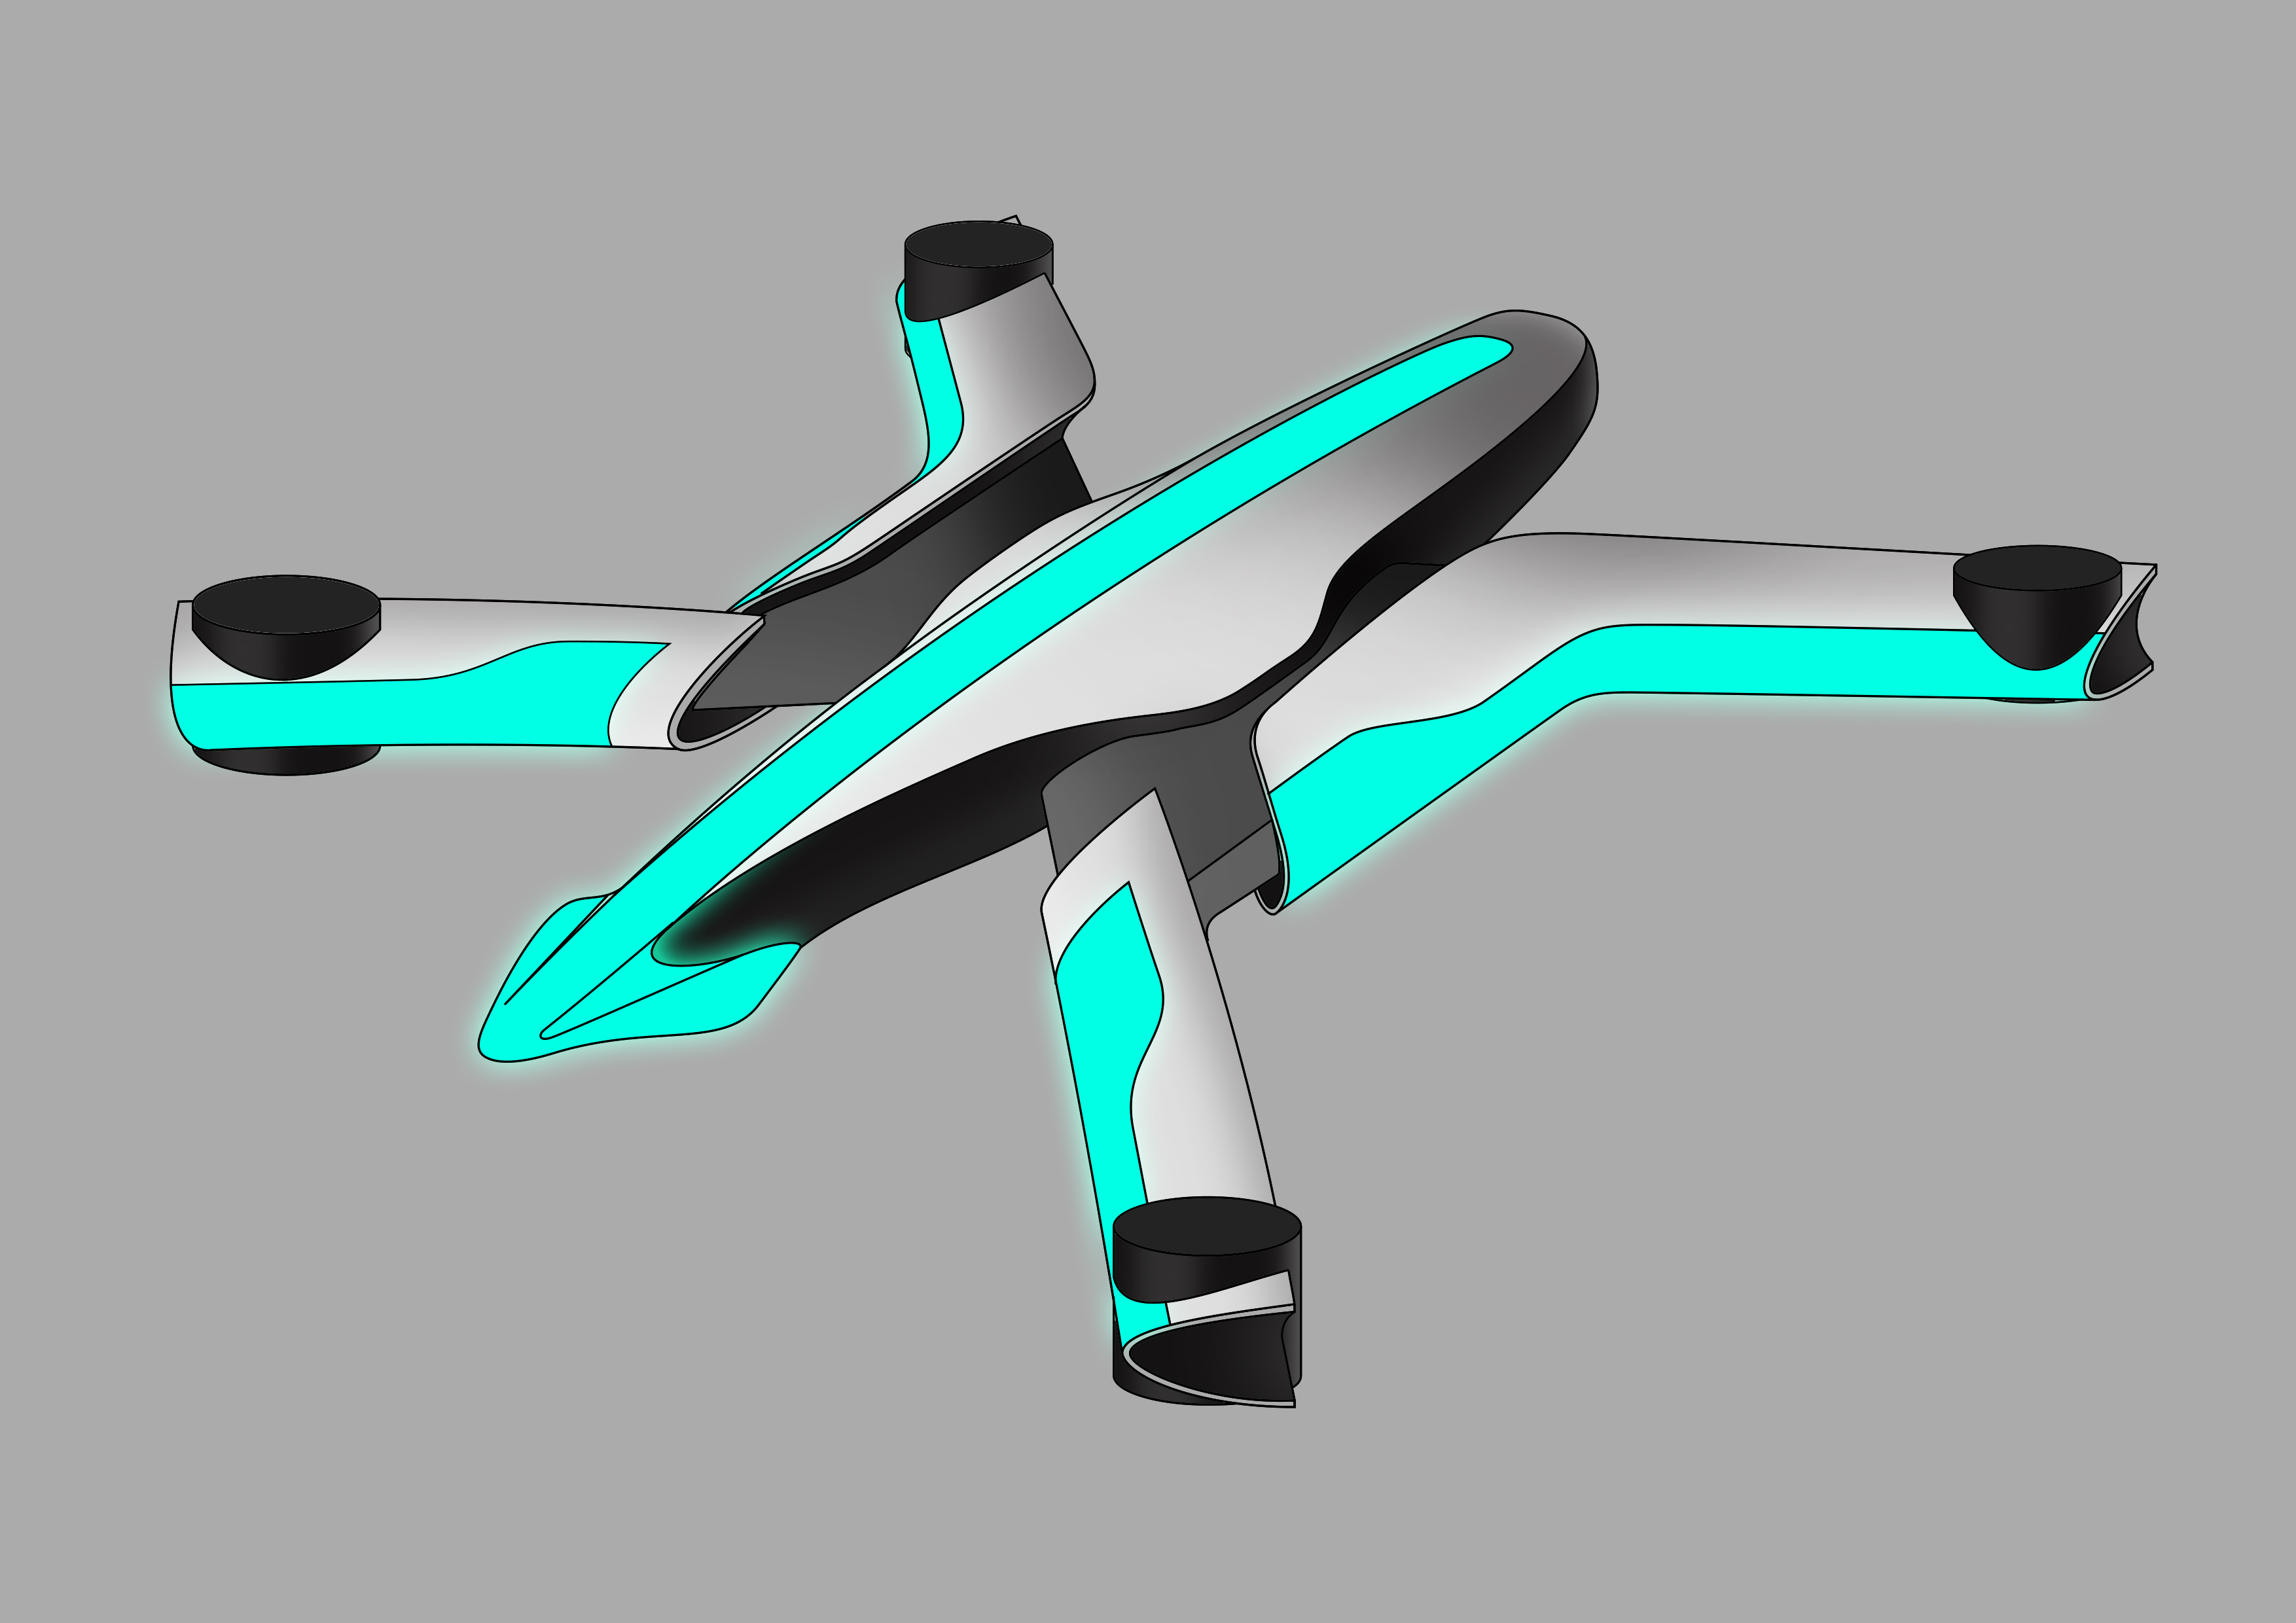 Racing drone concept